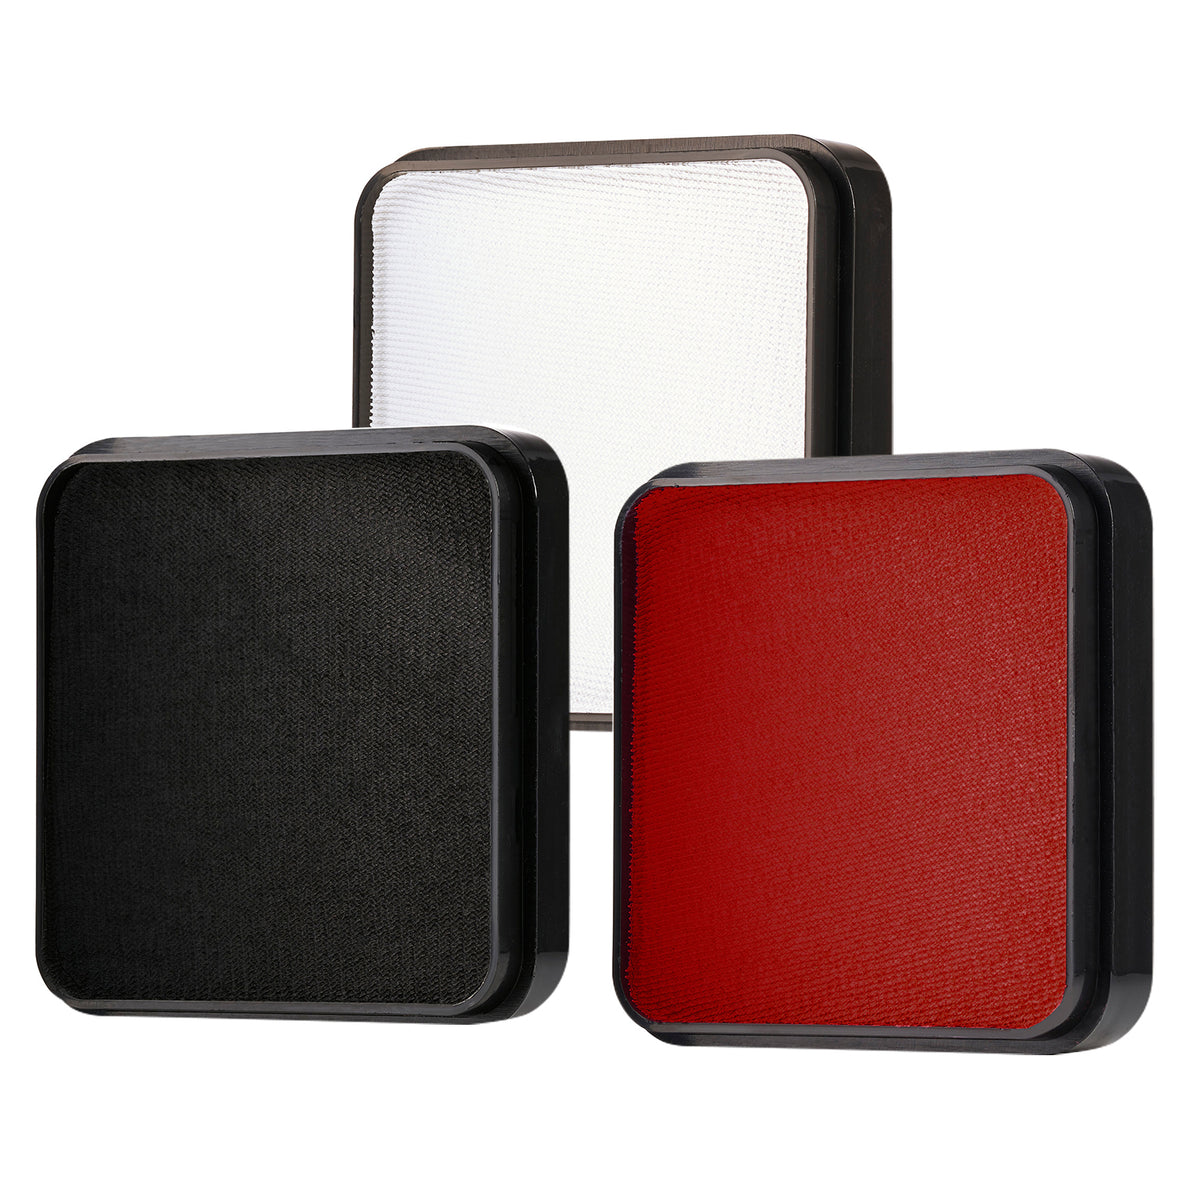 Kraze FX Face Paints - Red, Black &amp; White Value Pack (25 gm each)